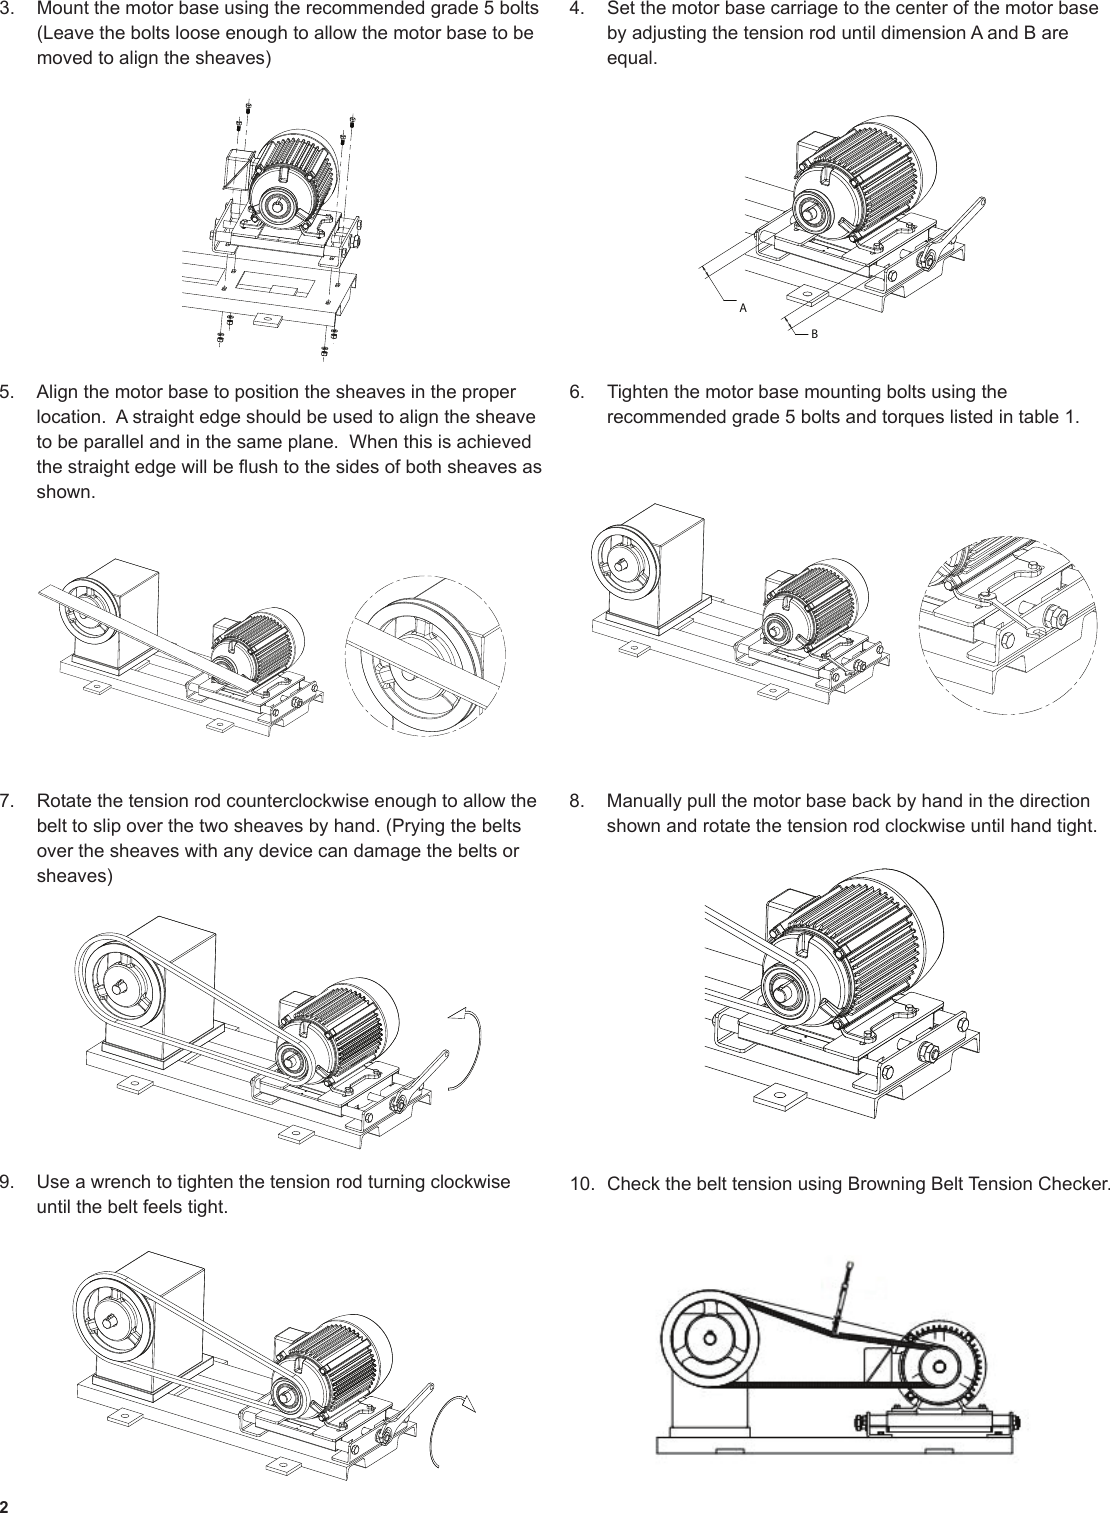 Page 2 of 3 - Emerson 600 MCIM14006E 9884E Browning Standard Motor Base Instruction And Maintenance Manual R7 User  3ea79e69-f2b6-4e2c-a632-3aa8b88f8b5f